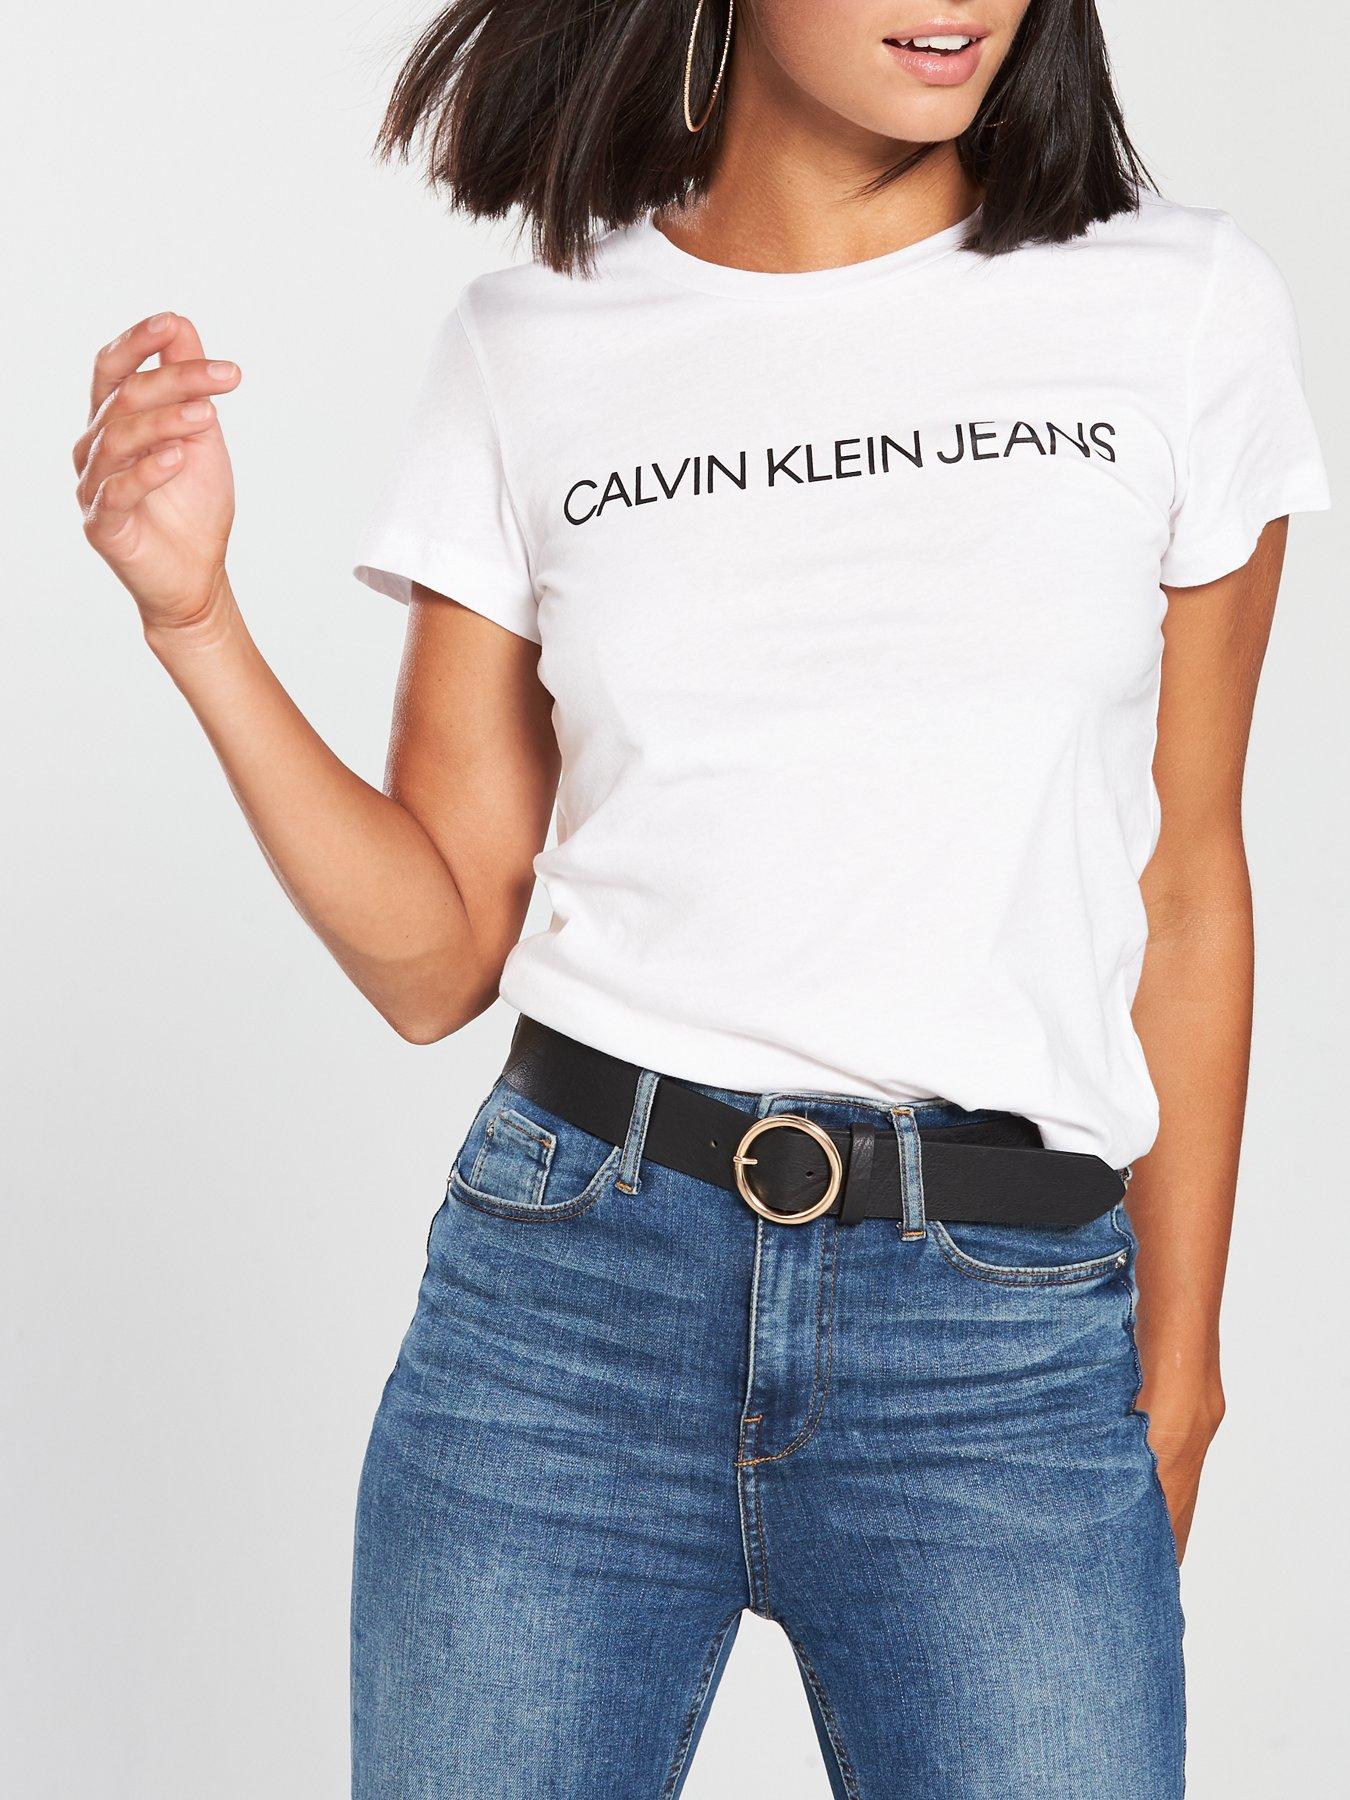 calvin klein jeans white shirt